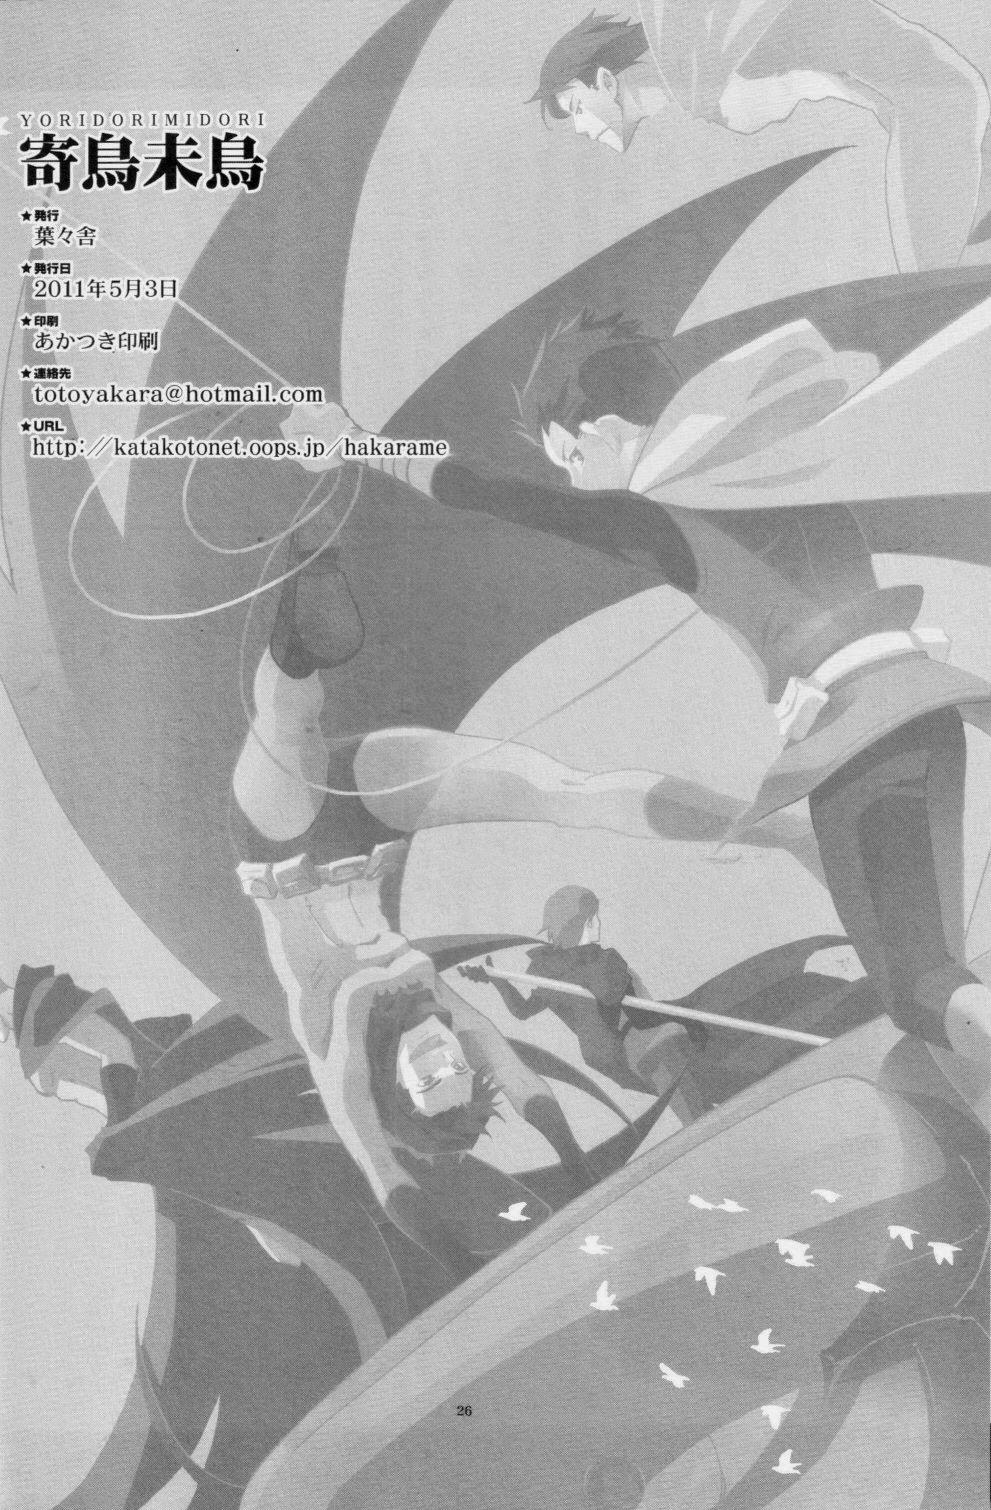 Yoridori Midori – Batman 24